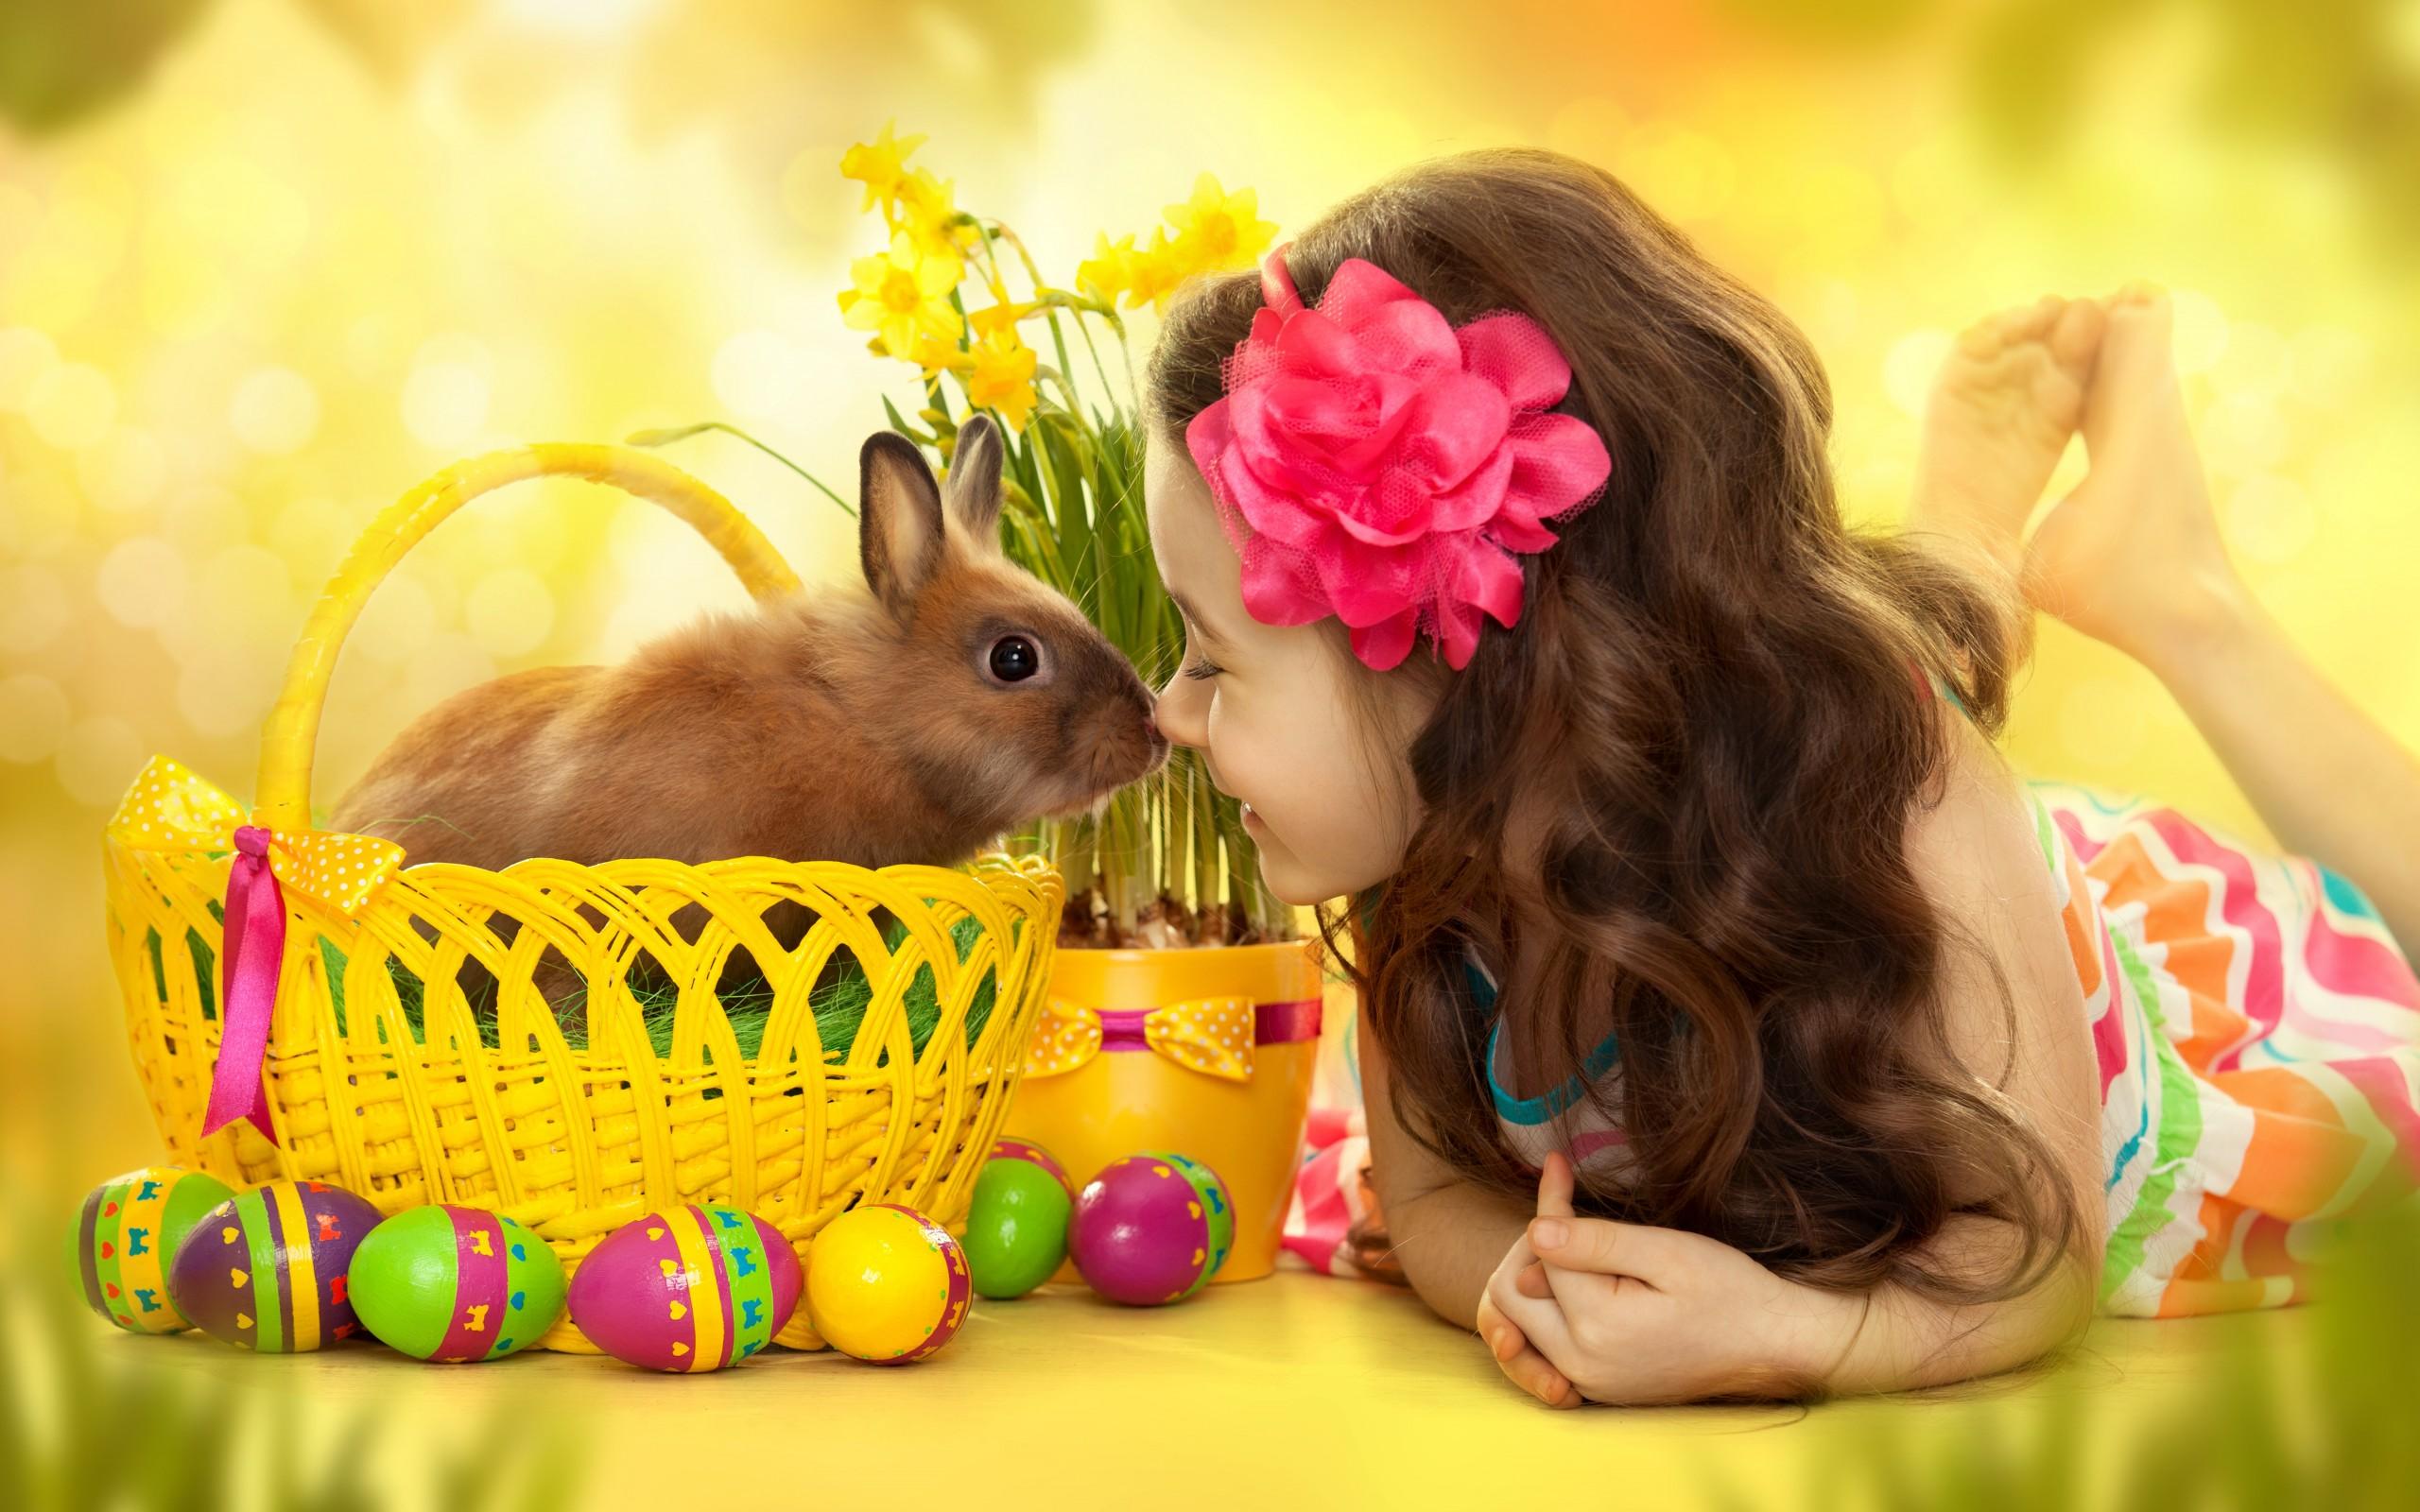 #Cute girl, #Easter Eggs, #Easter Bunny. Holidays